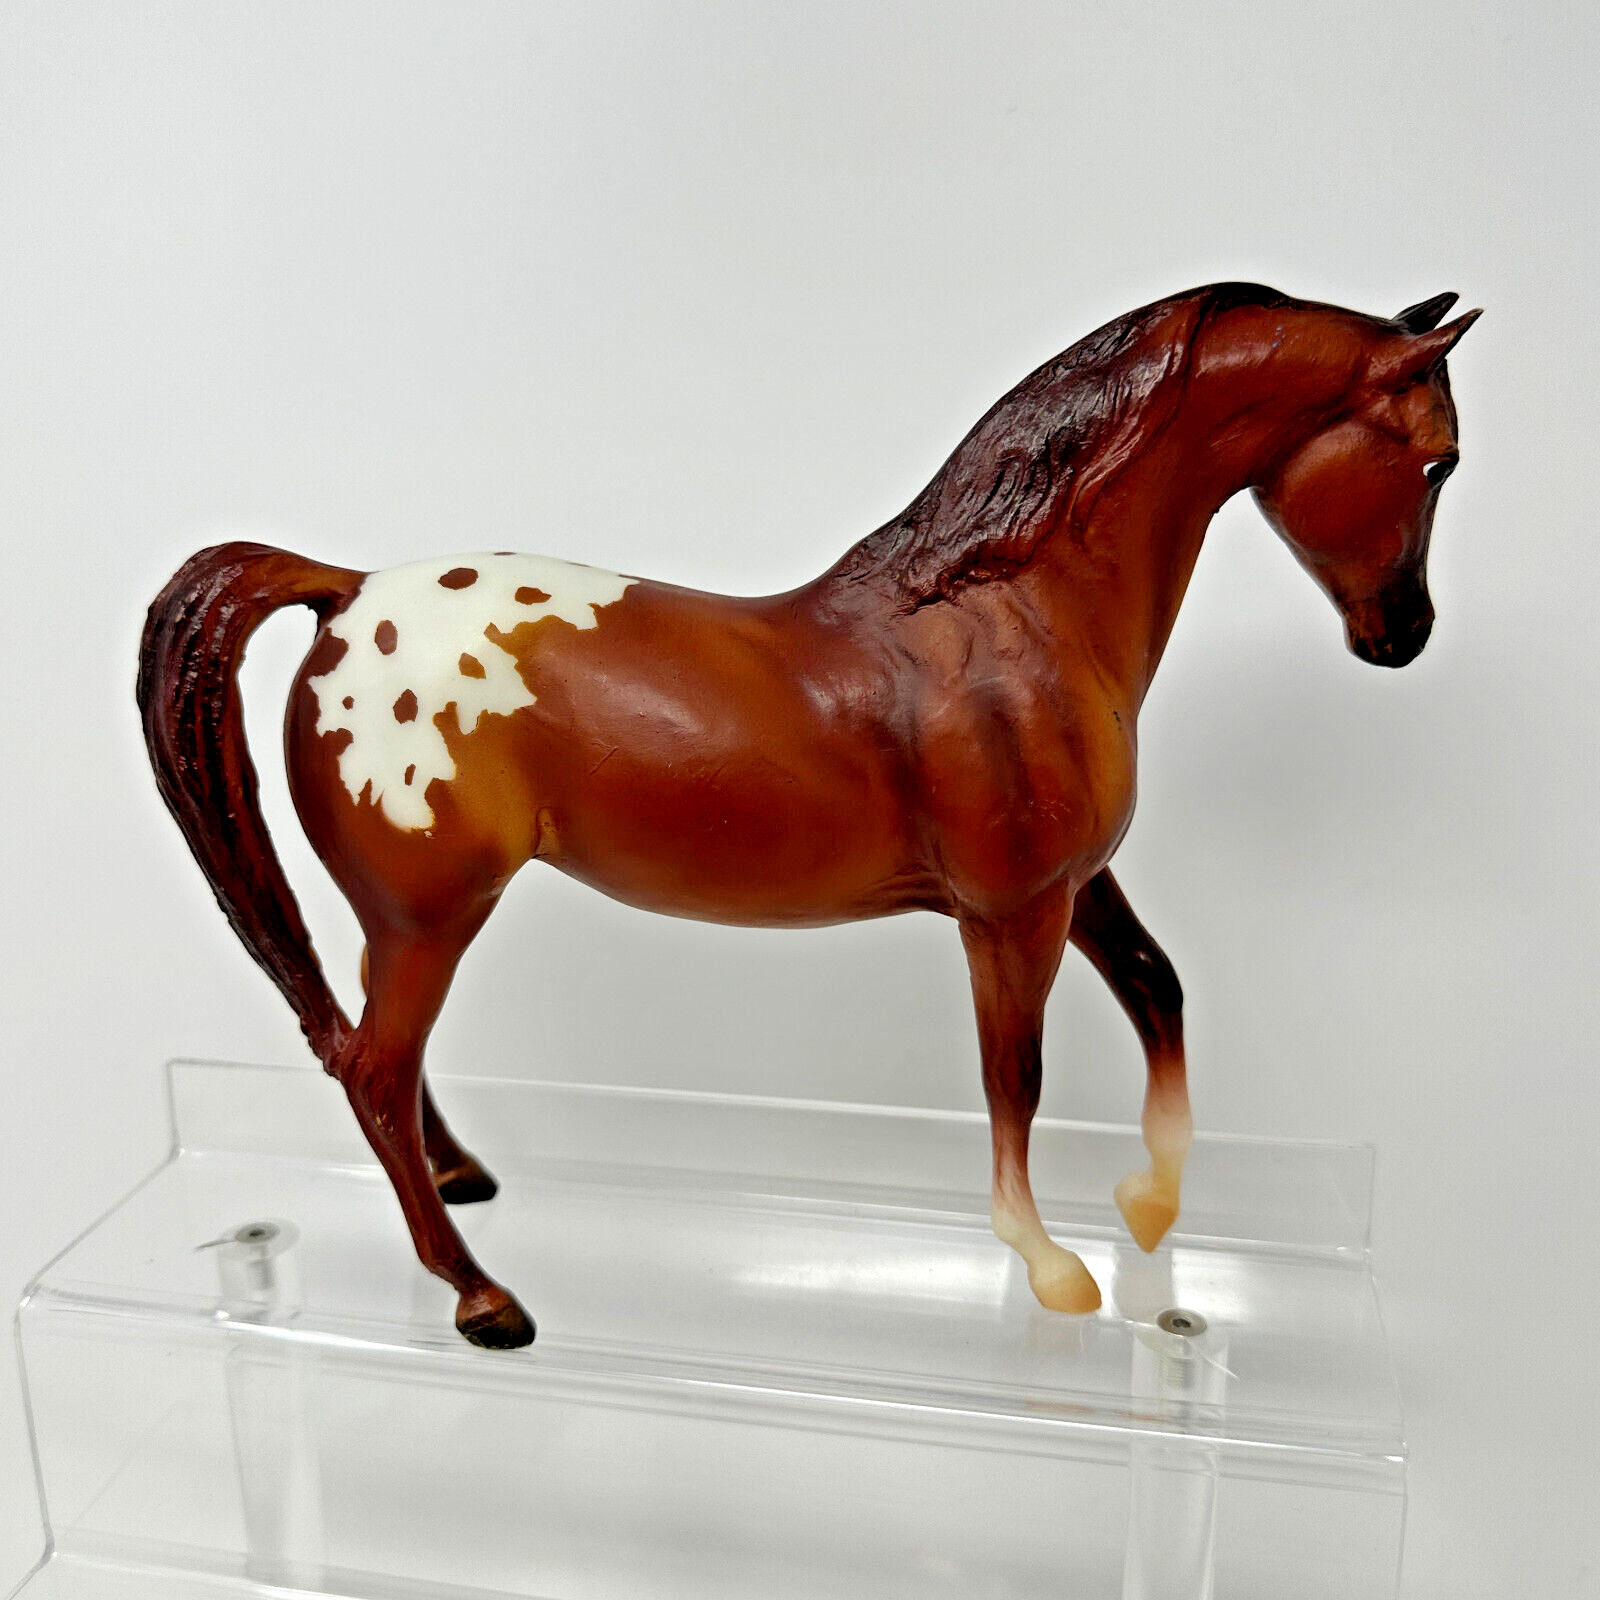 Breyer HORSE #937 CHESTNUT APPALOOSA BLANKET JOHAR 2013 CLASSIC SCALE